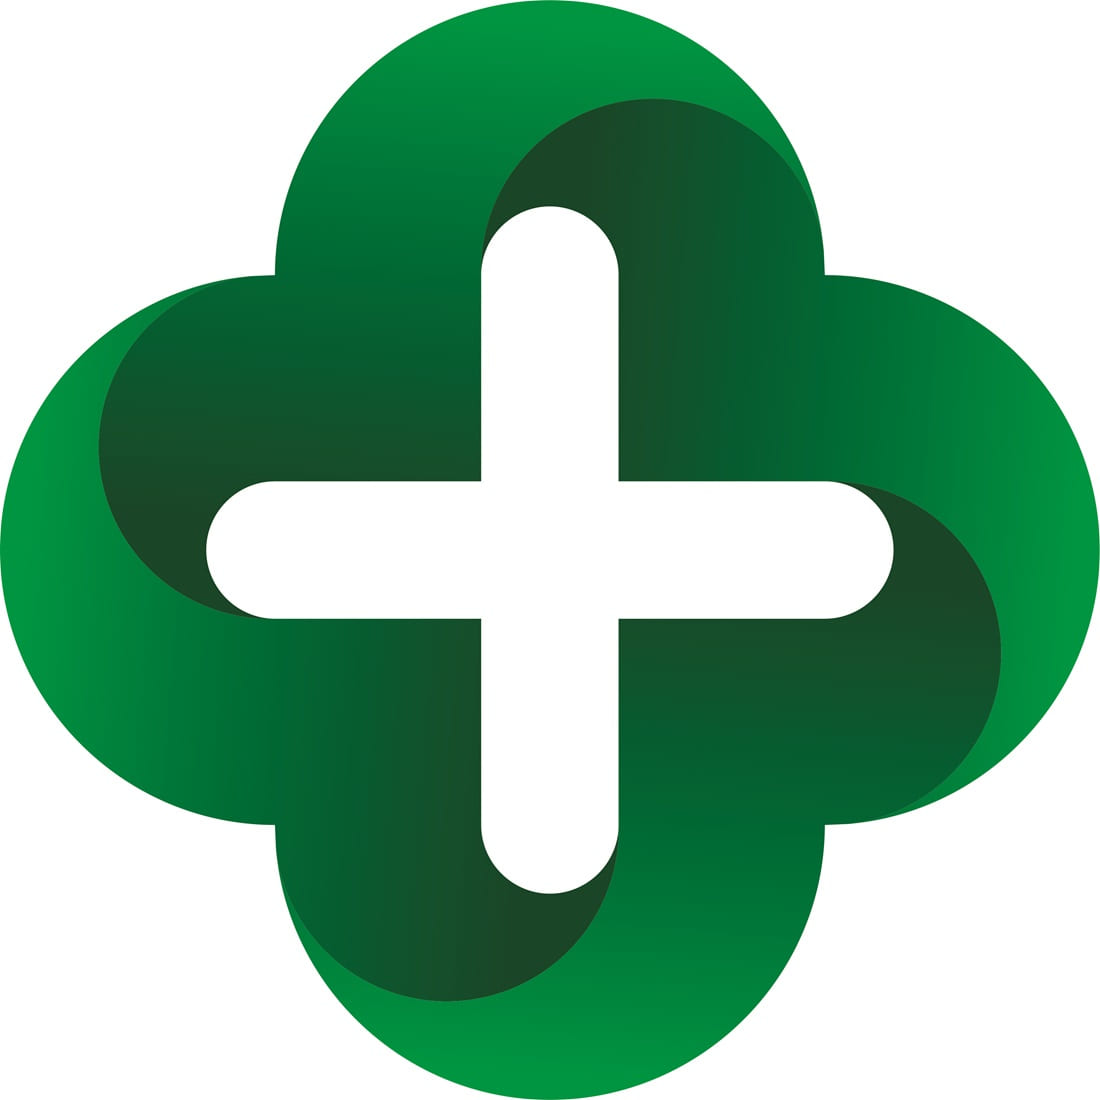 Medical logo cover image.